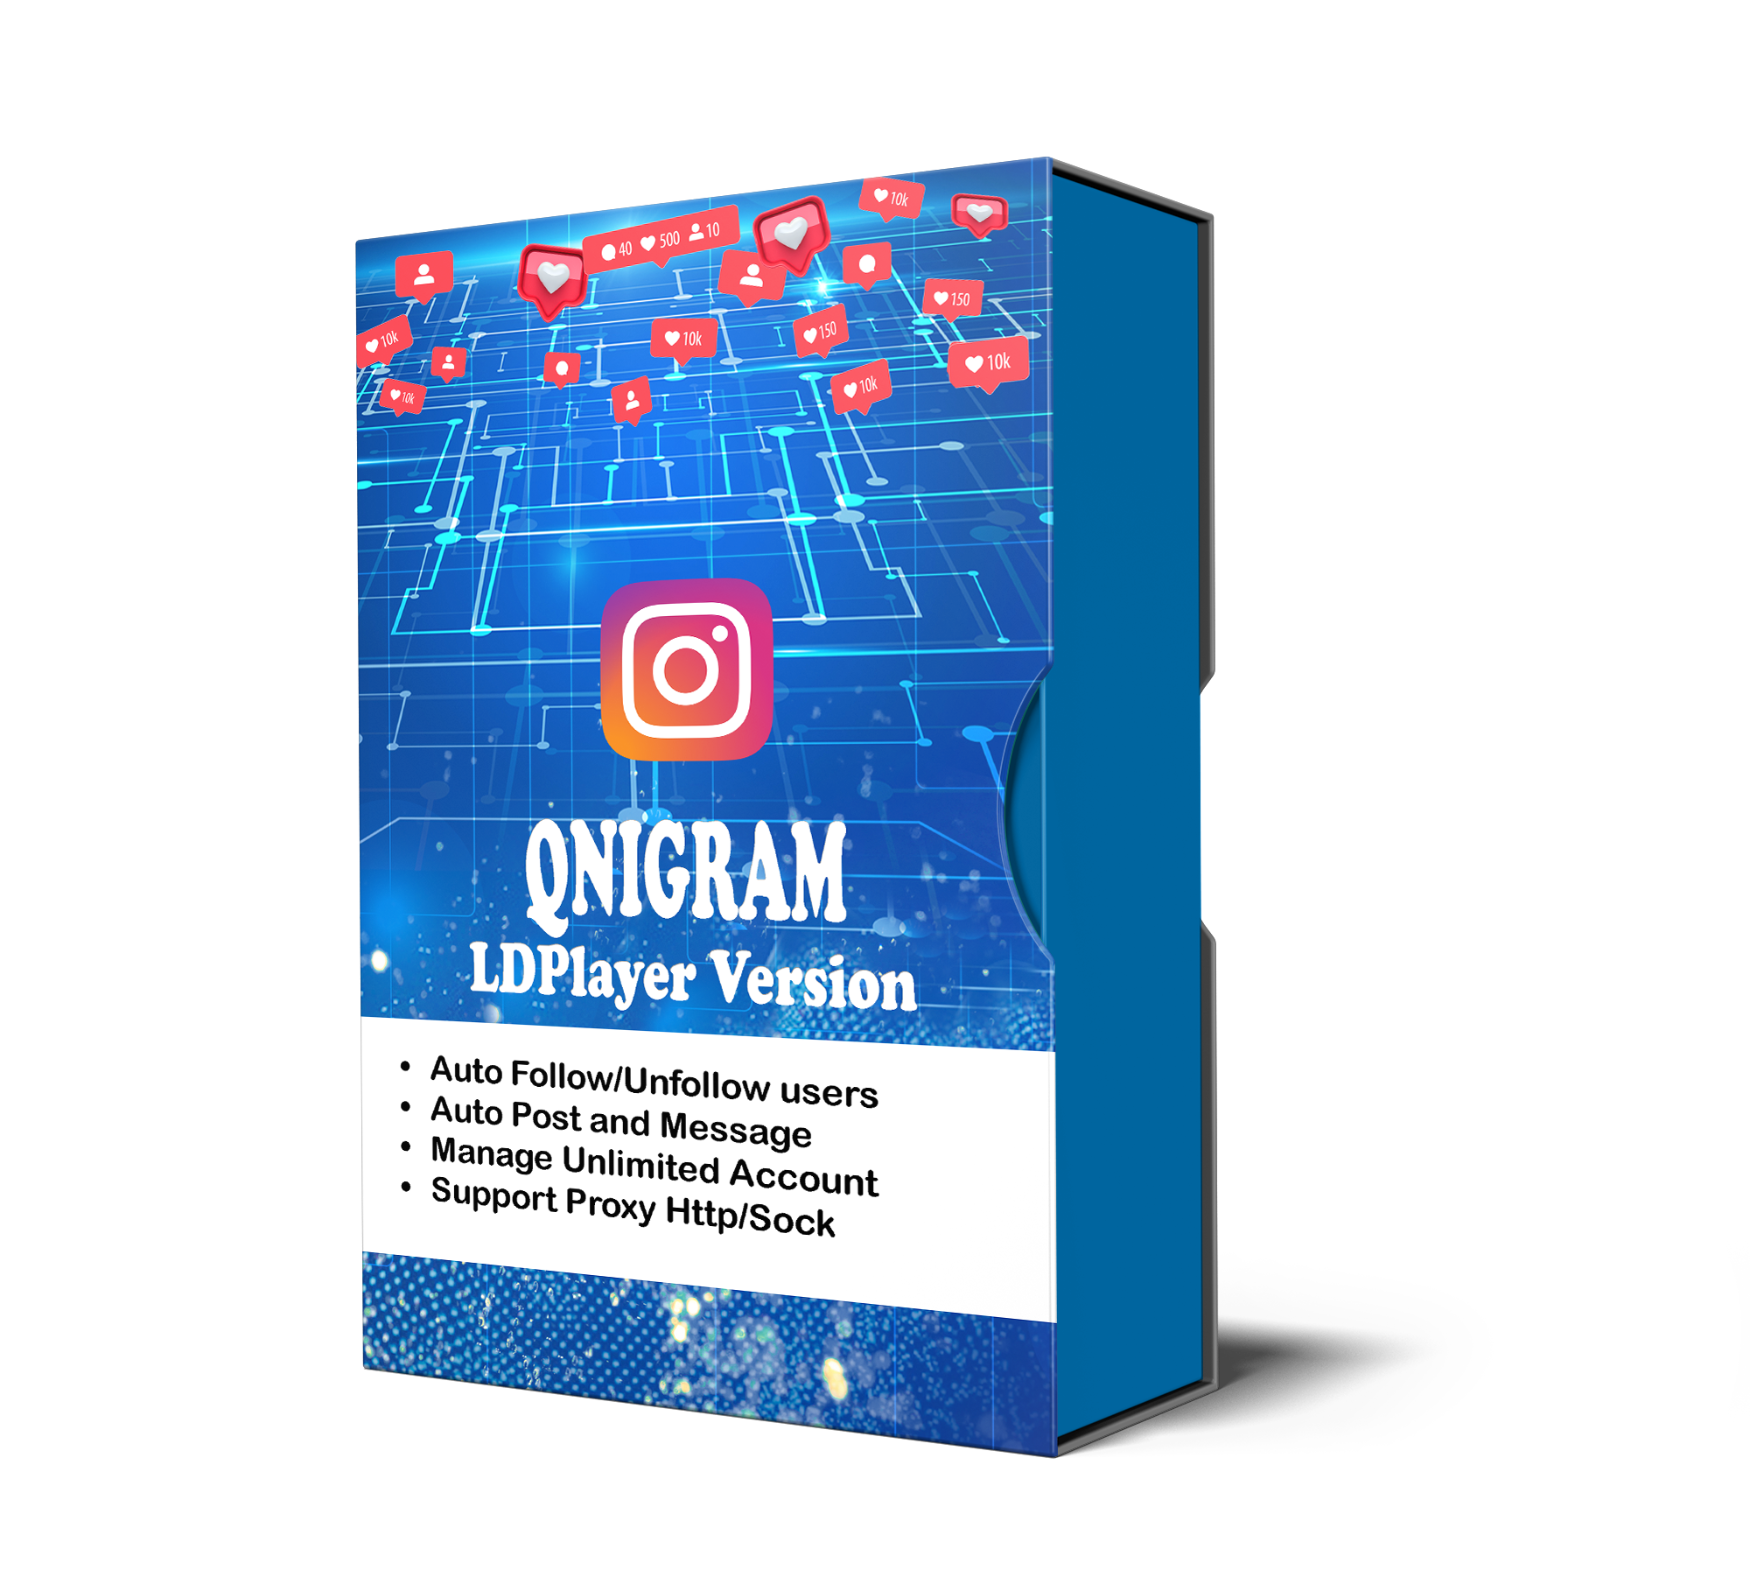 QniGram (LDPlayer version)